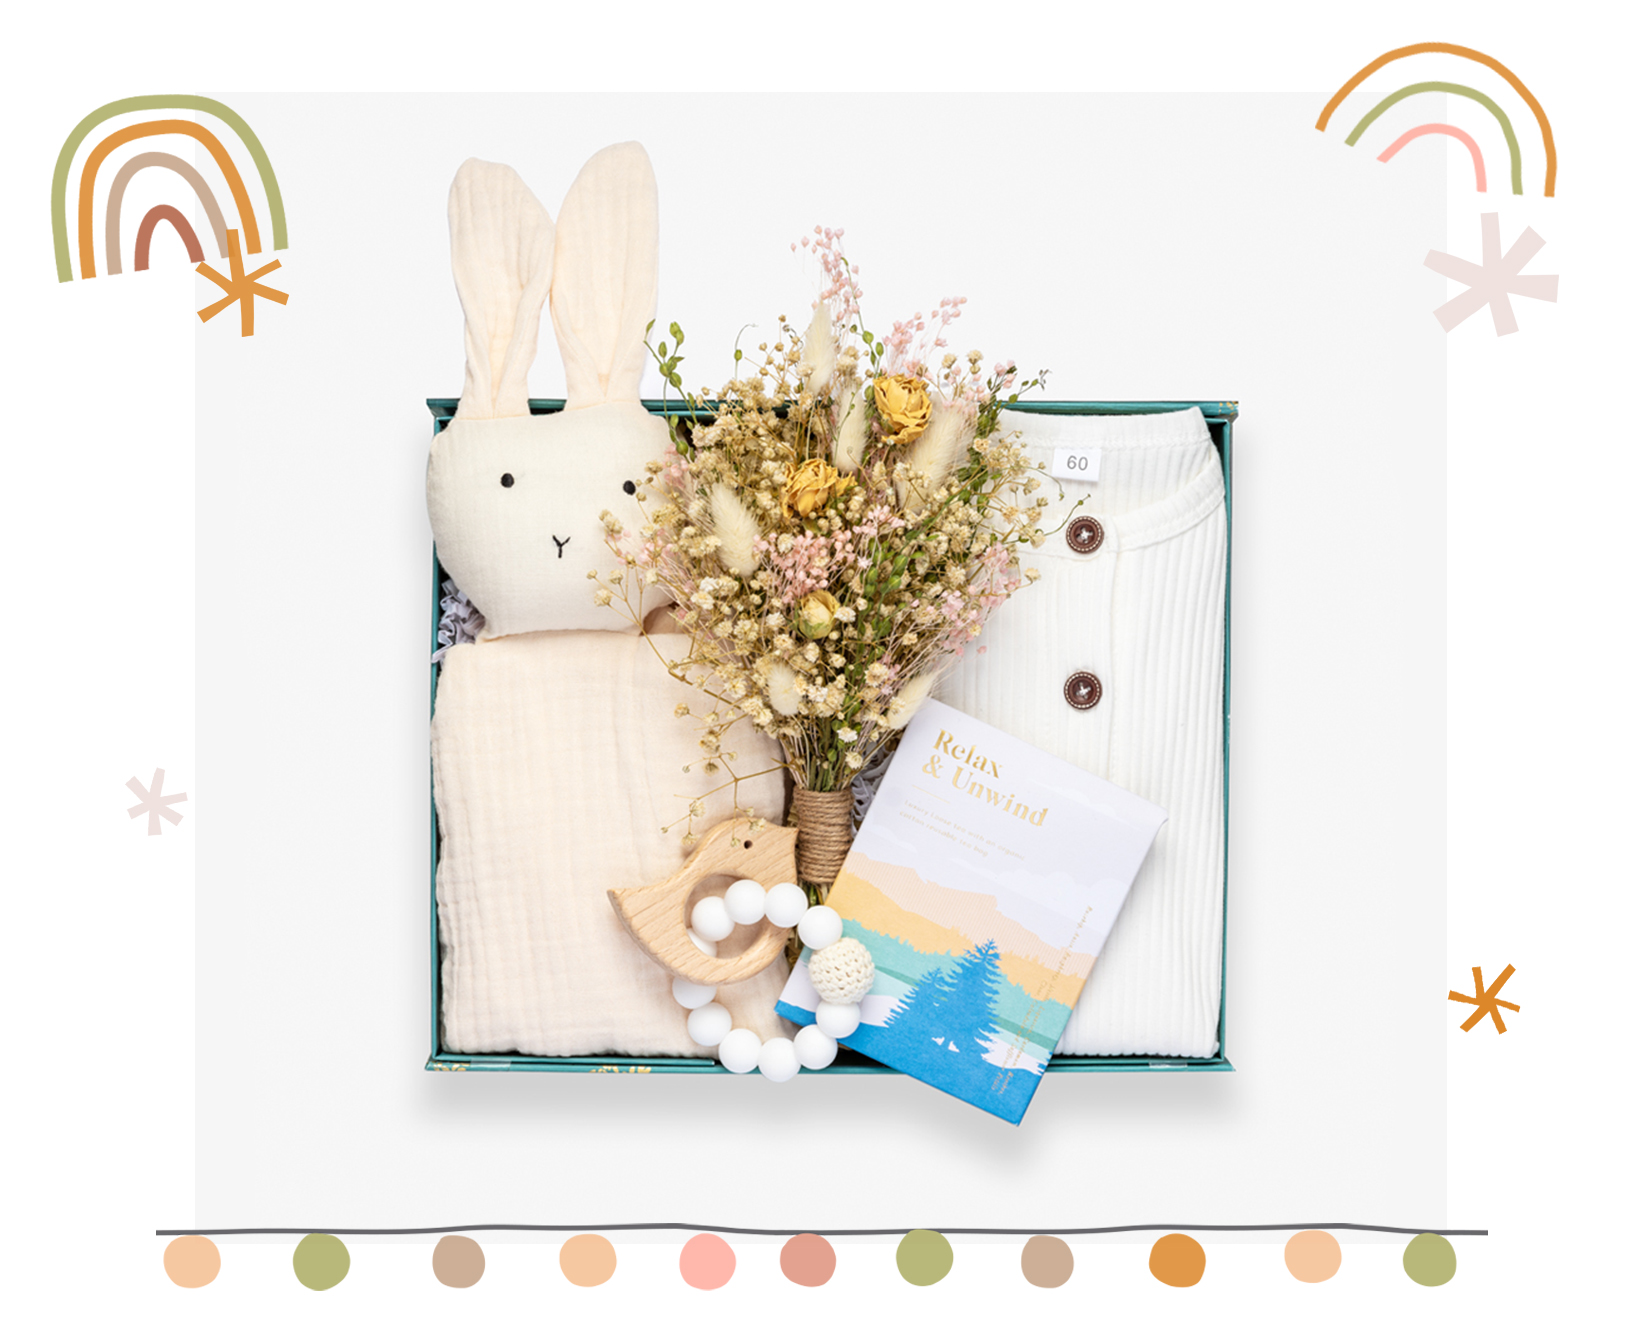 Newborn Nuzzles Baby Box with illustrative decoration